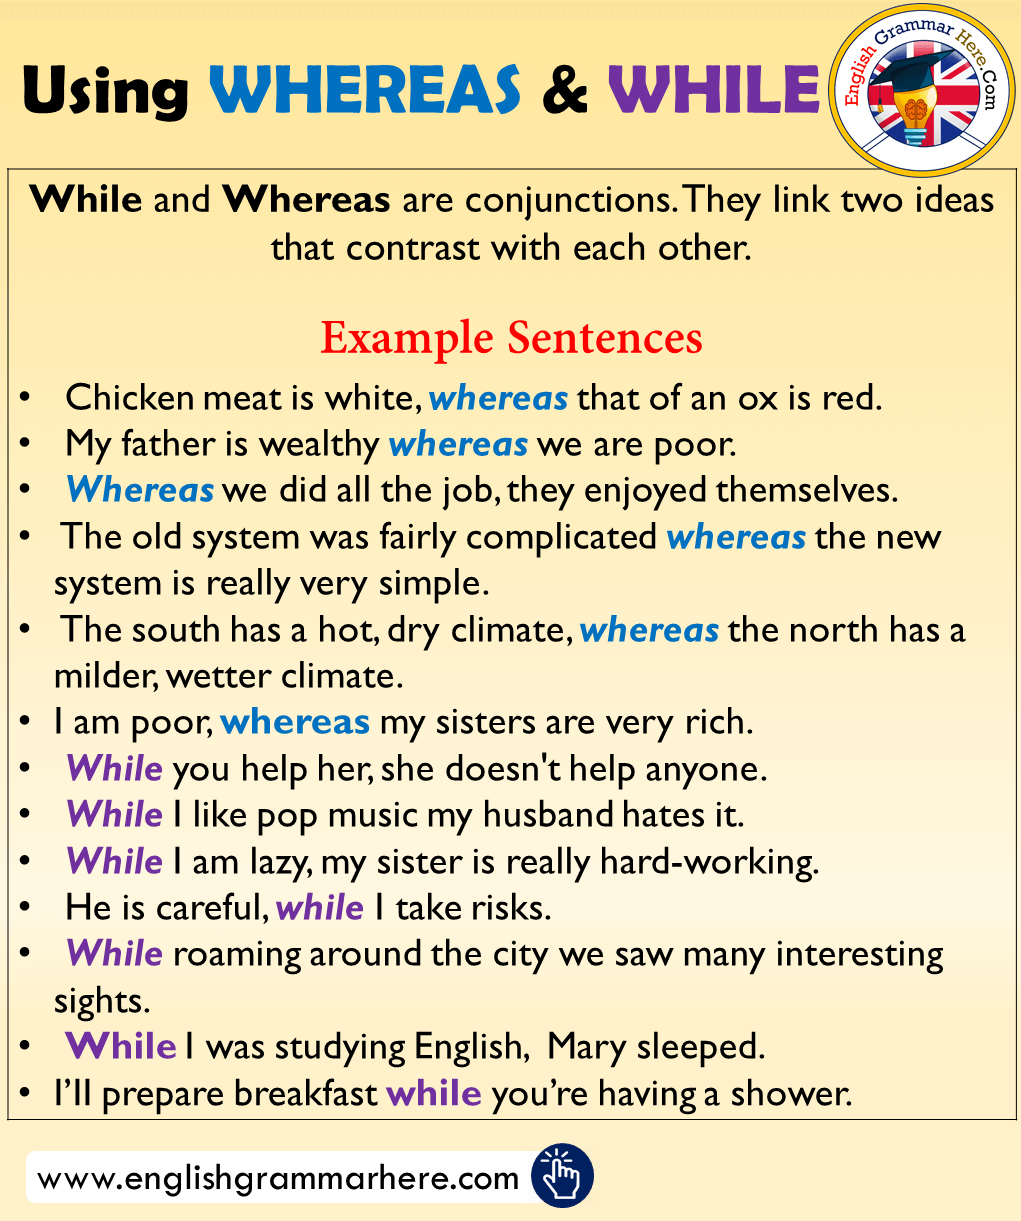 Using WHEREAS & WHILE, Example Sentences